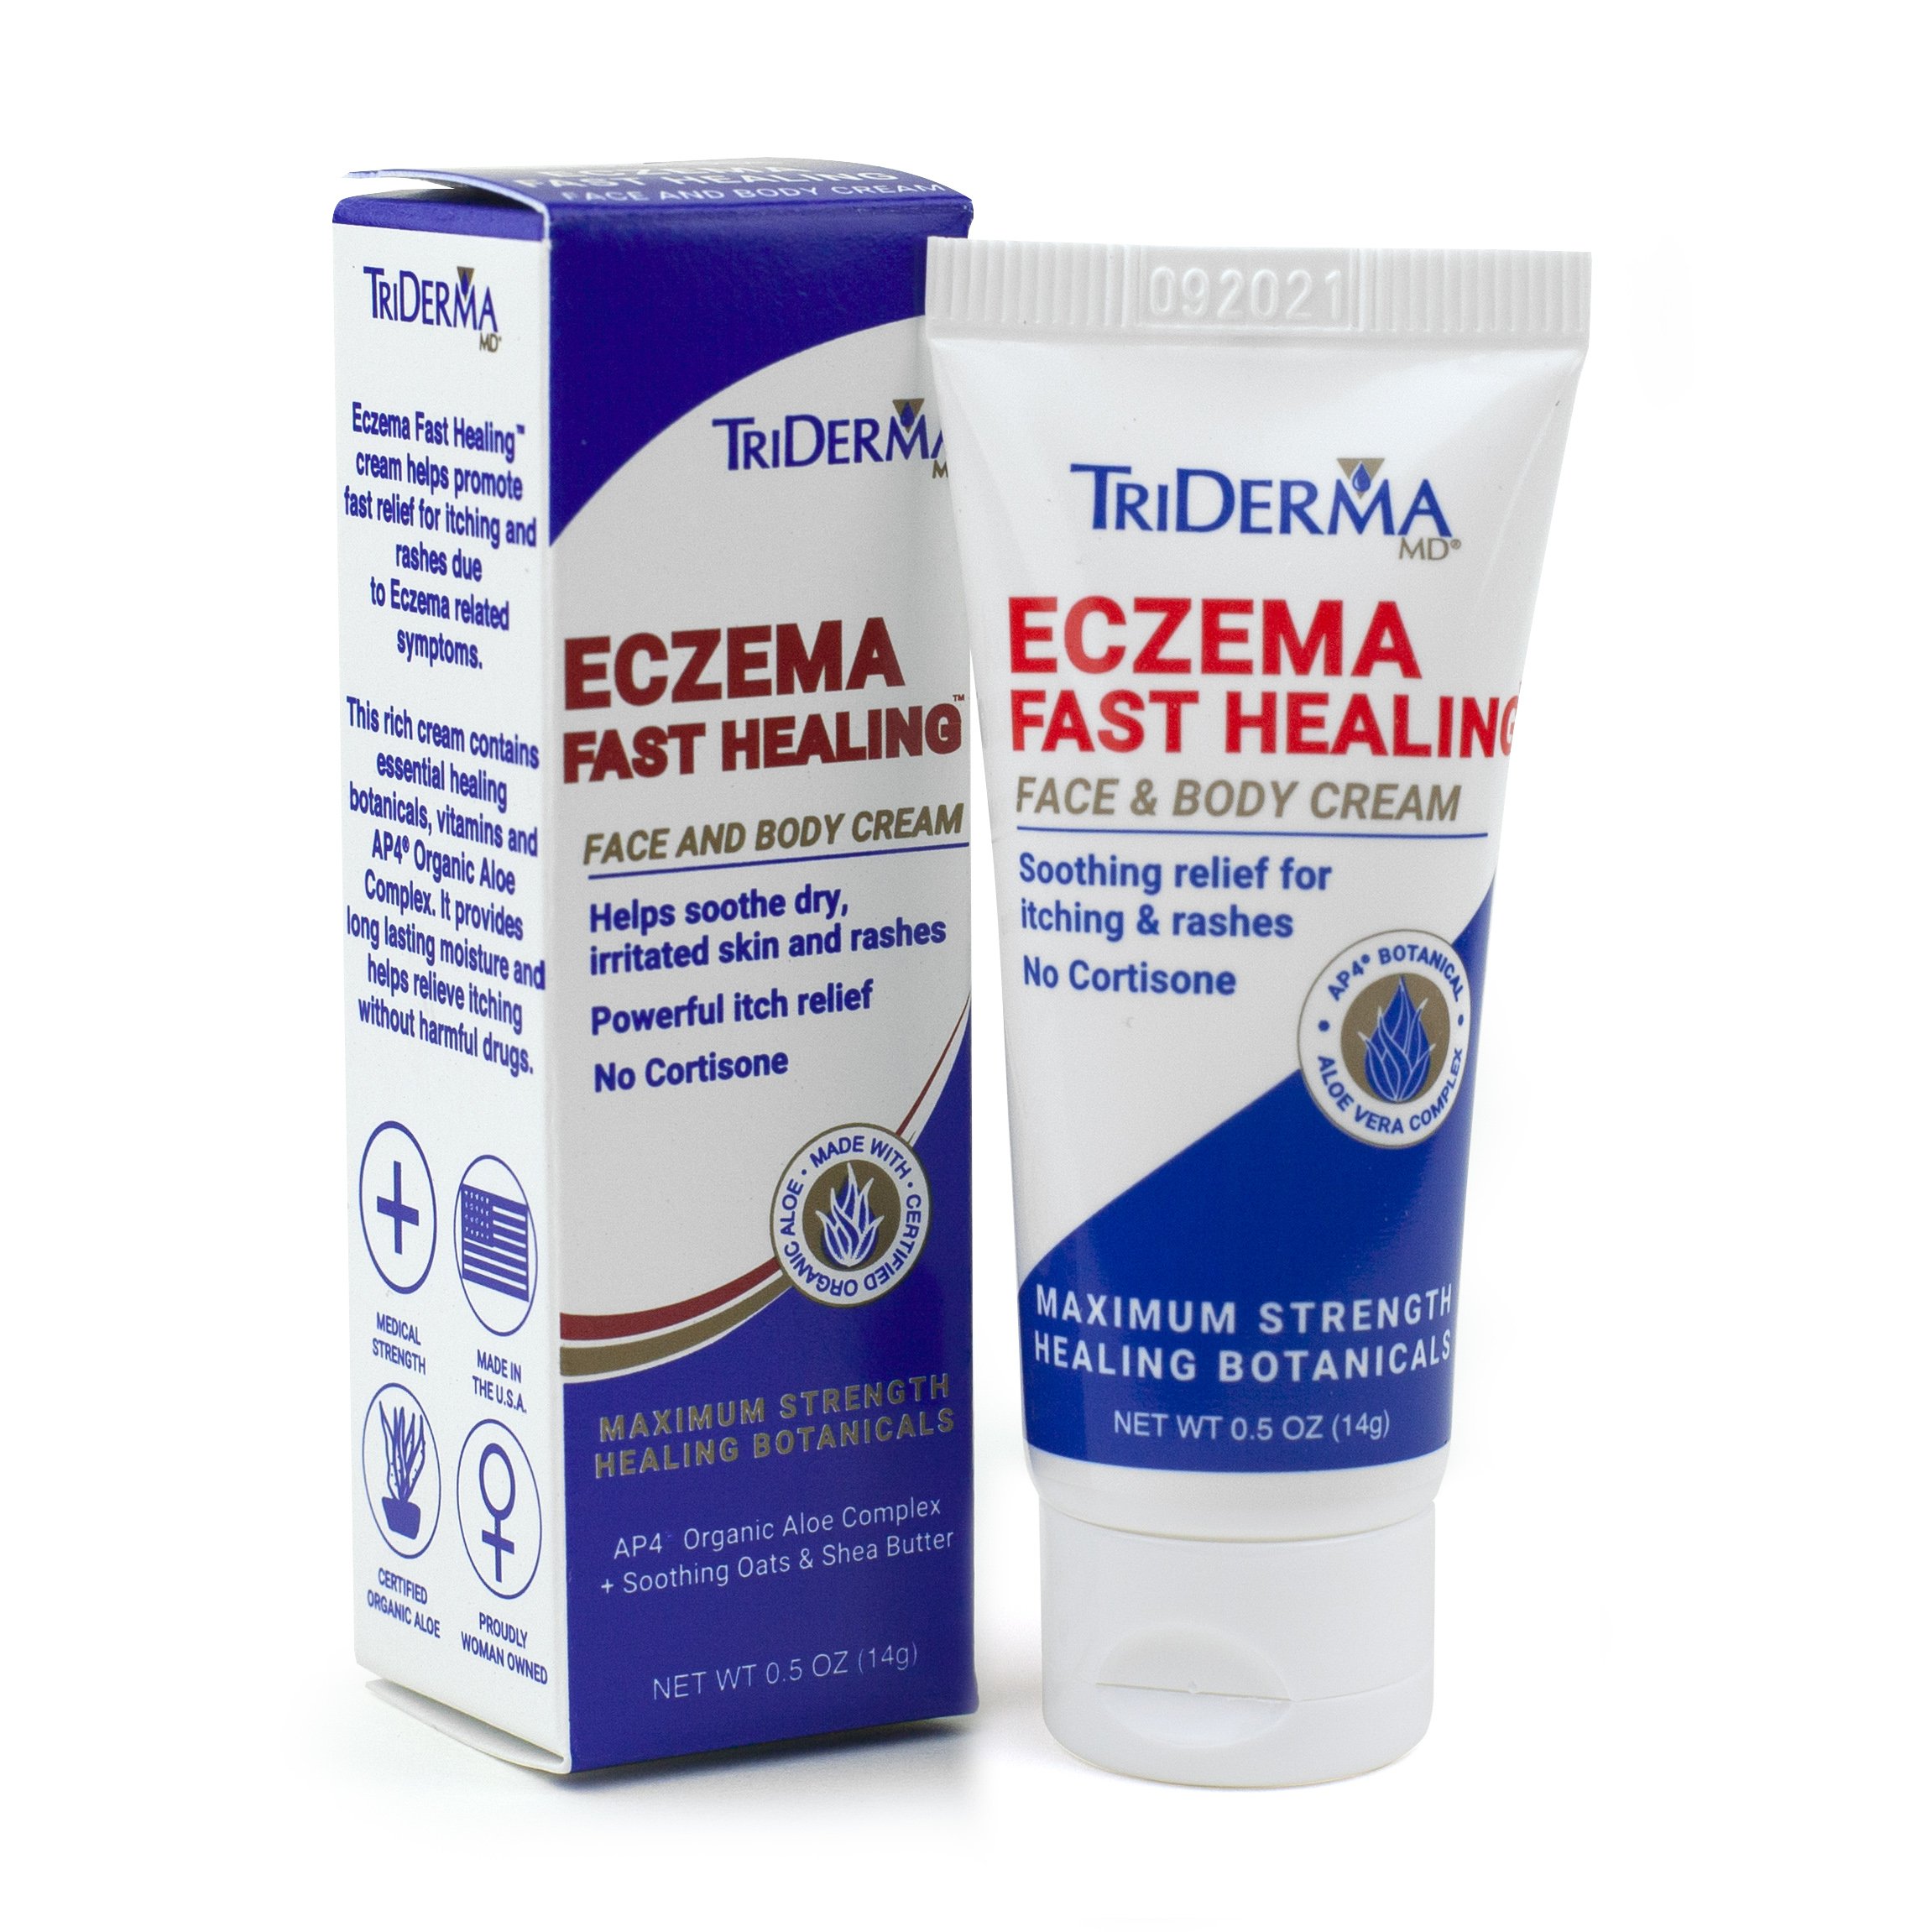 Eczema Fast Healing